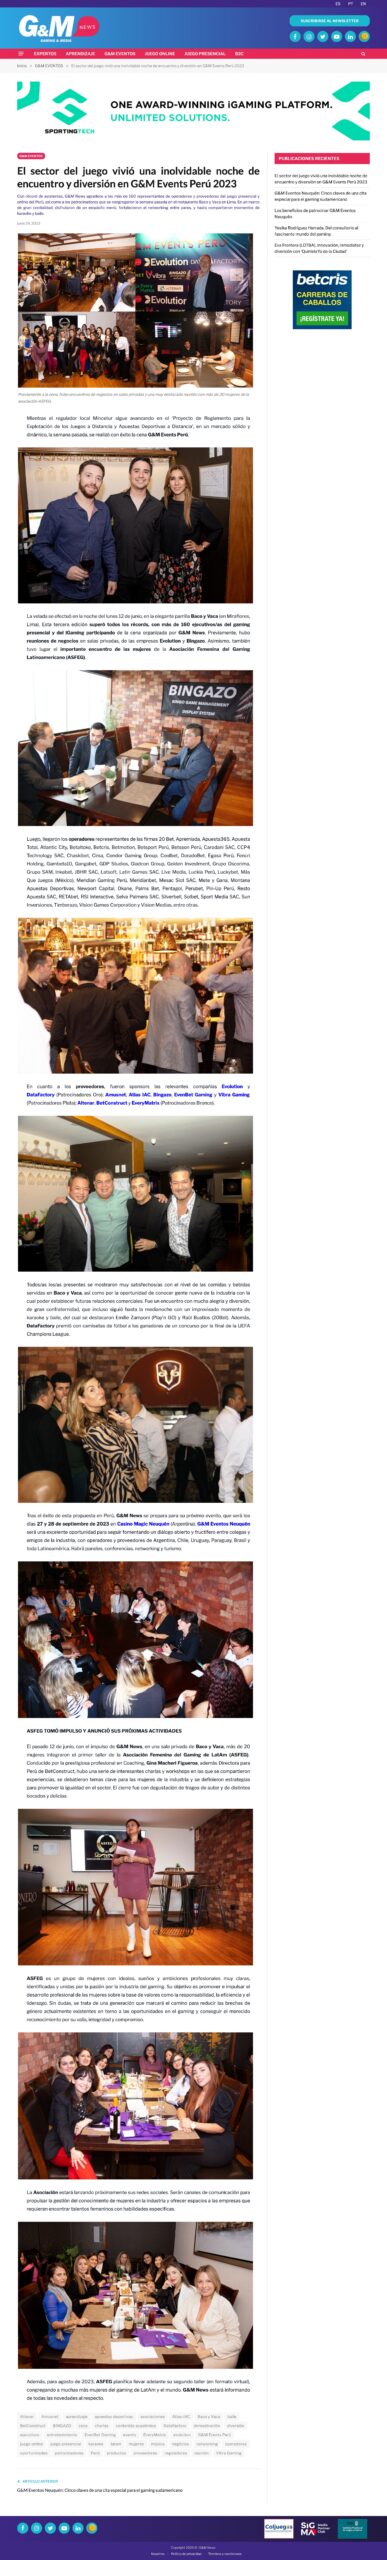 BINGAZO Success at G&M Dinner Lima Peru